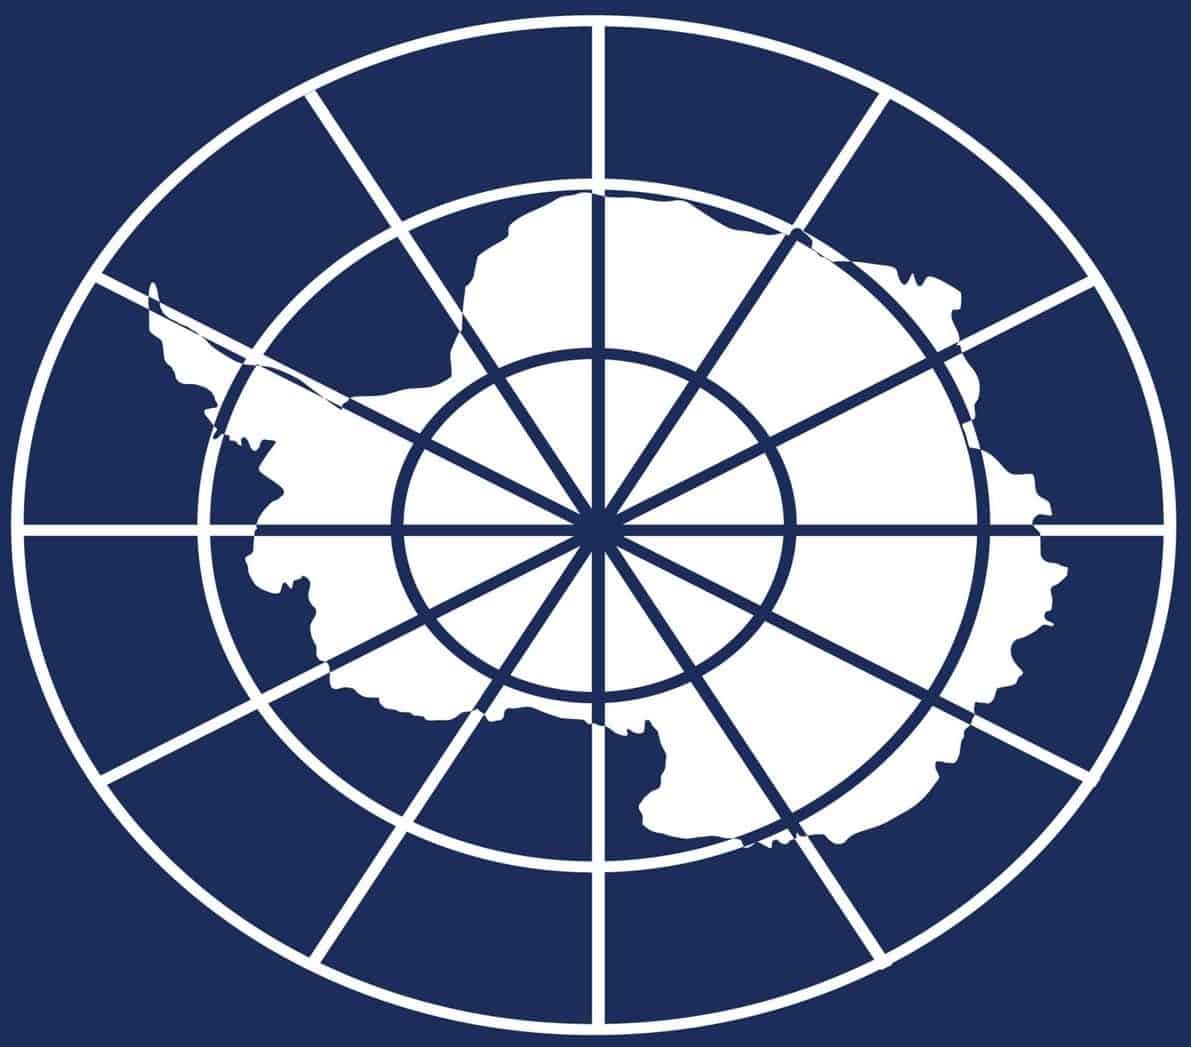 antarctic treaty secretariat logo